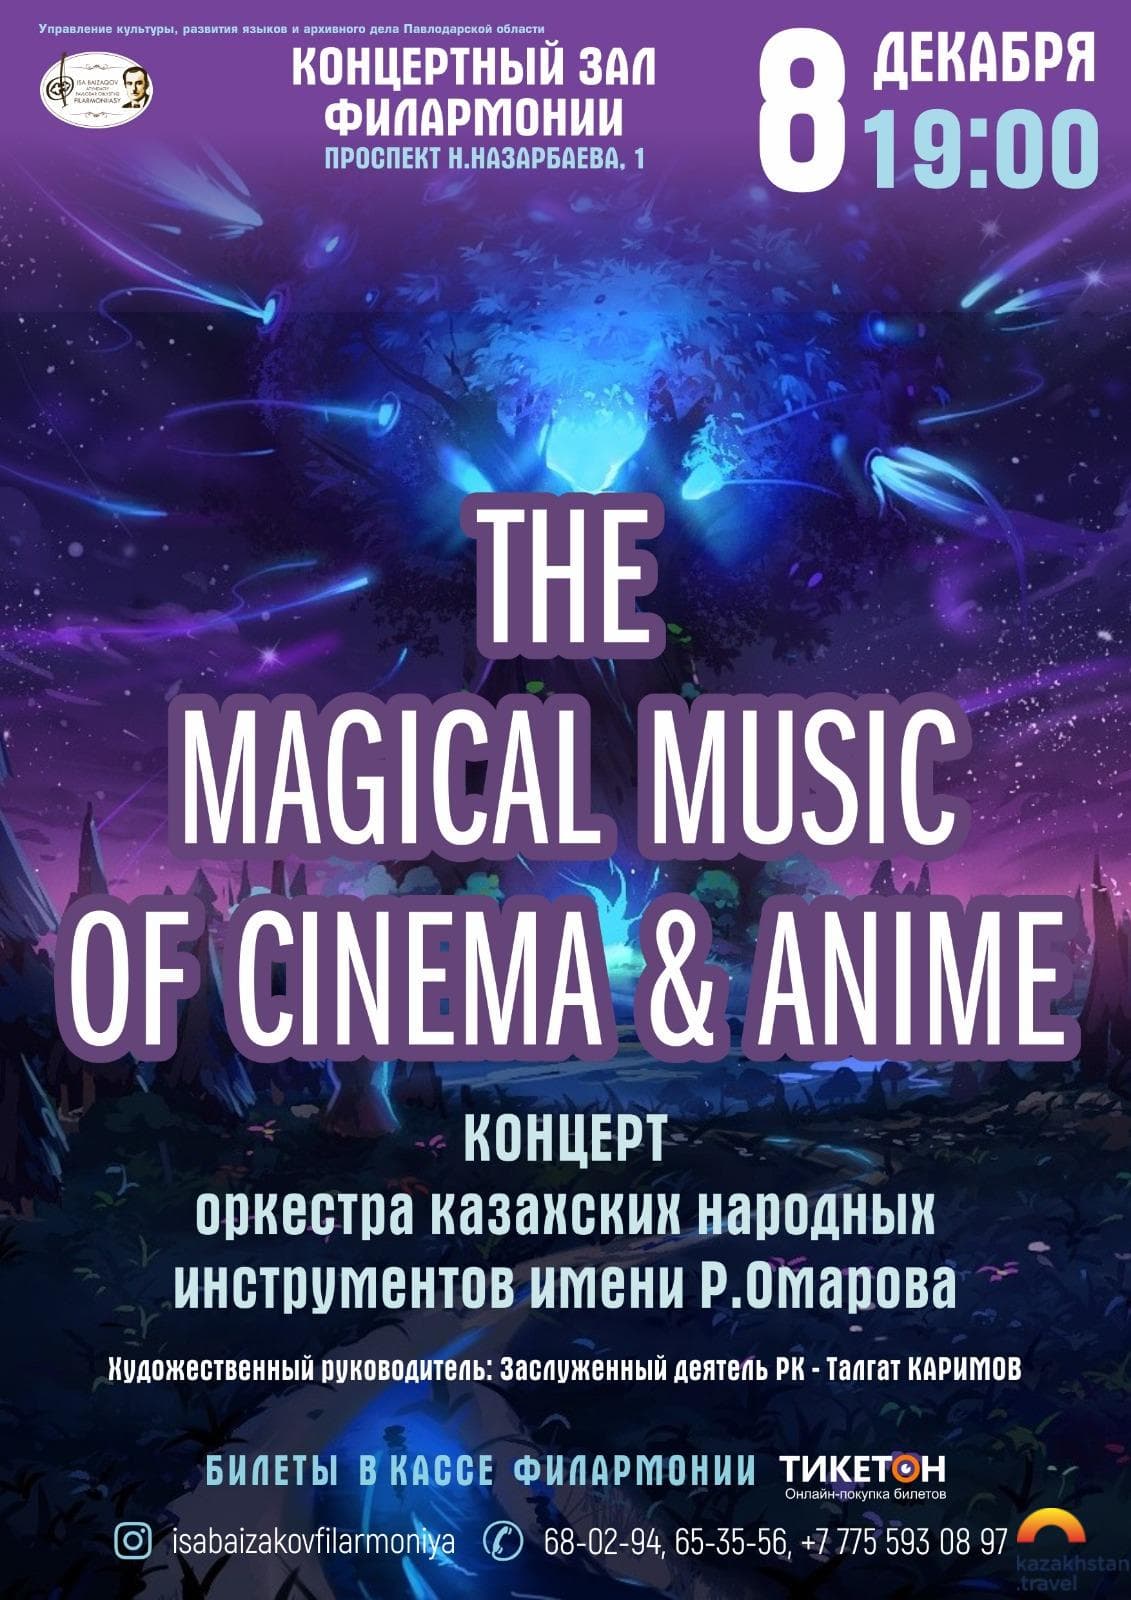 The Magical music og cinema & anime